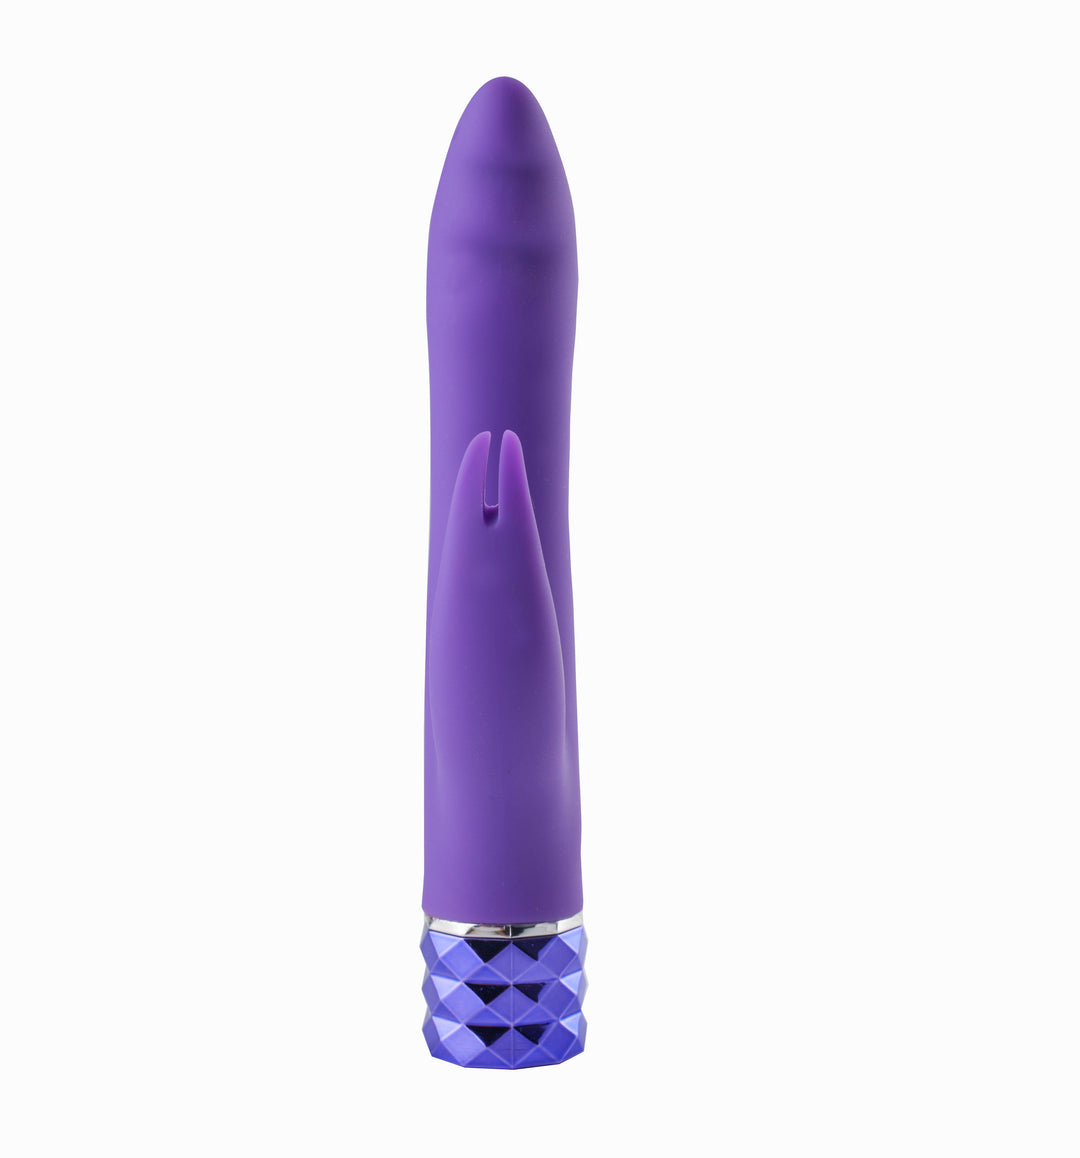 Maia Hailey Rabbit Vibrator - Purple